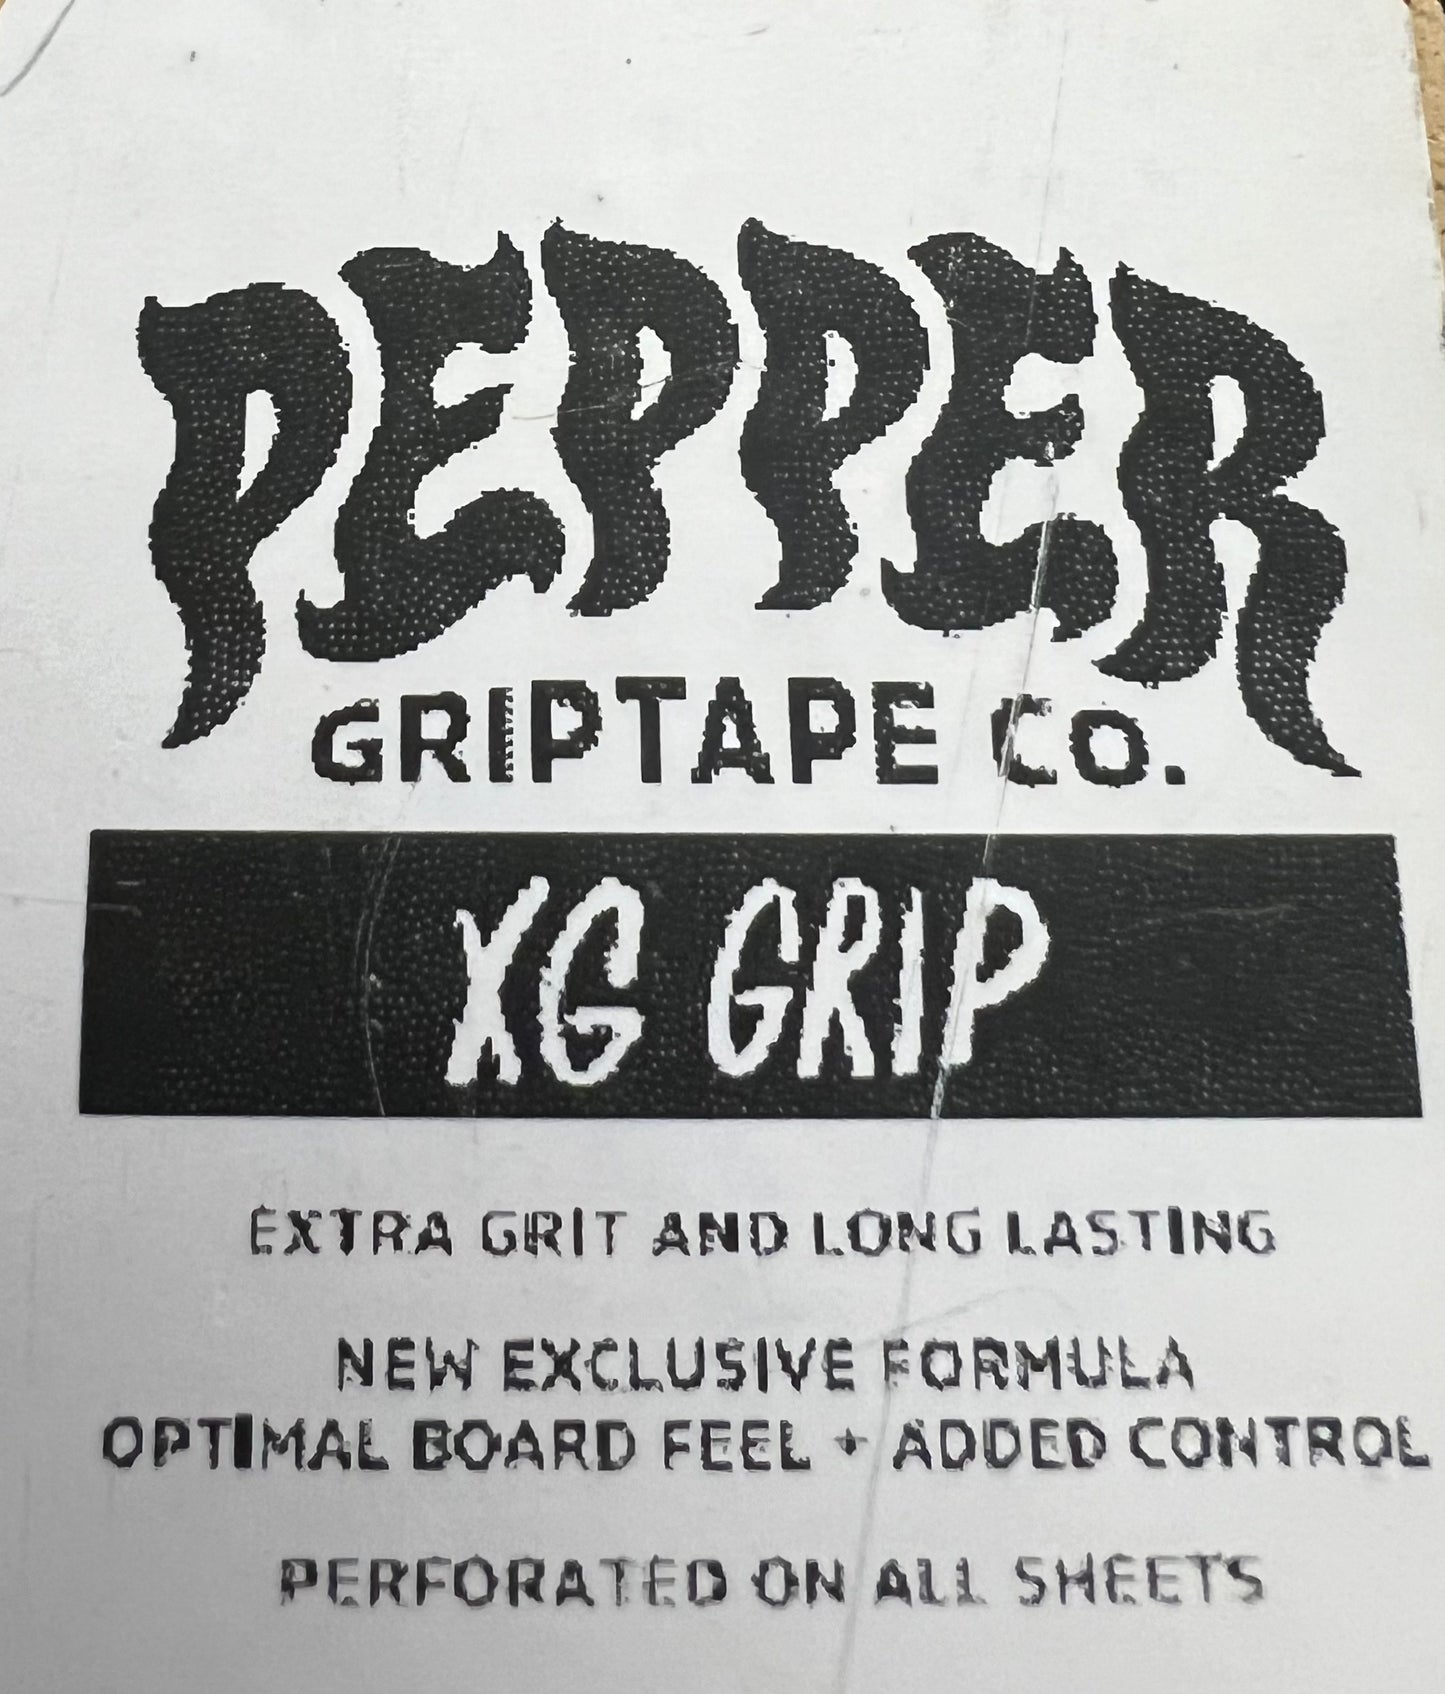 Pepper XG Grip tape